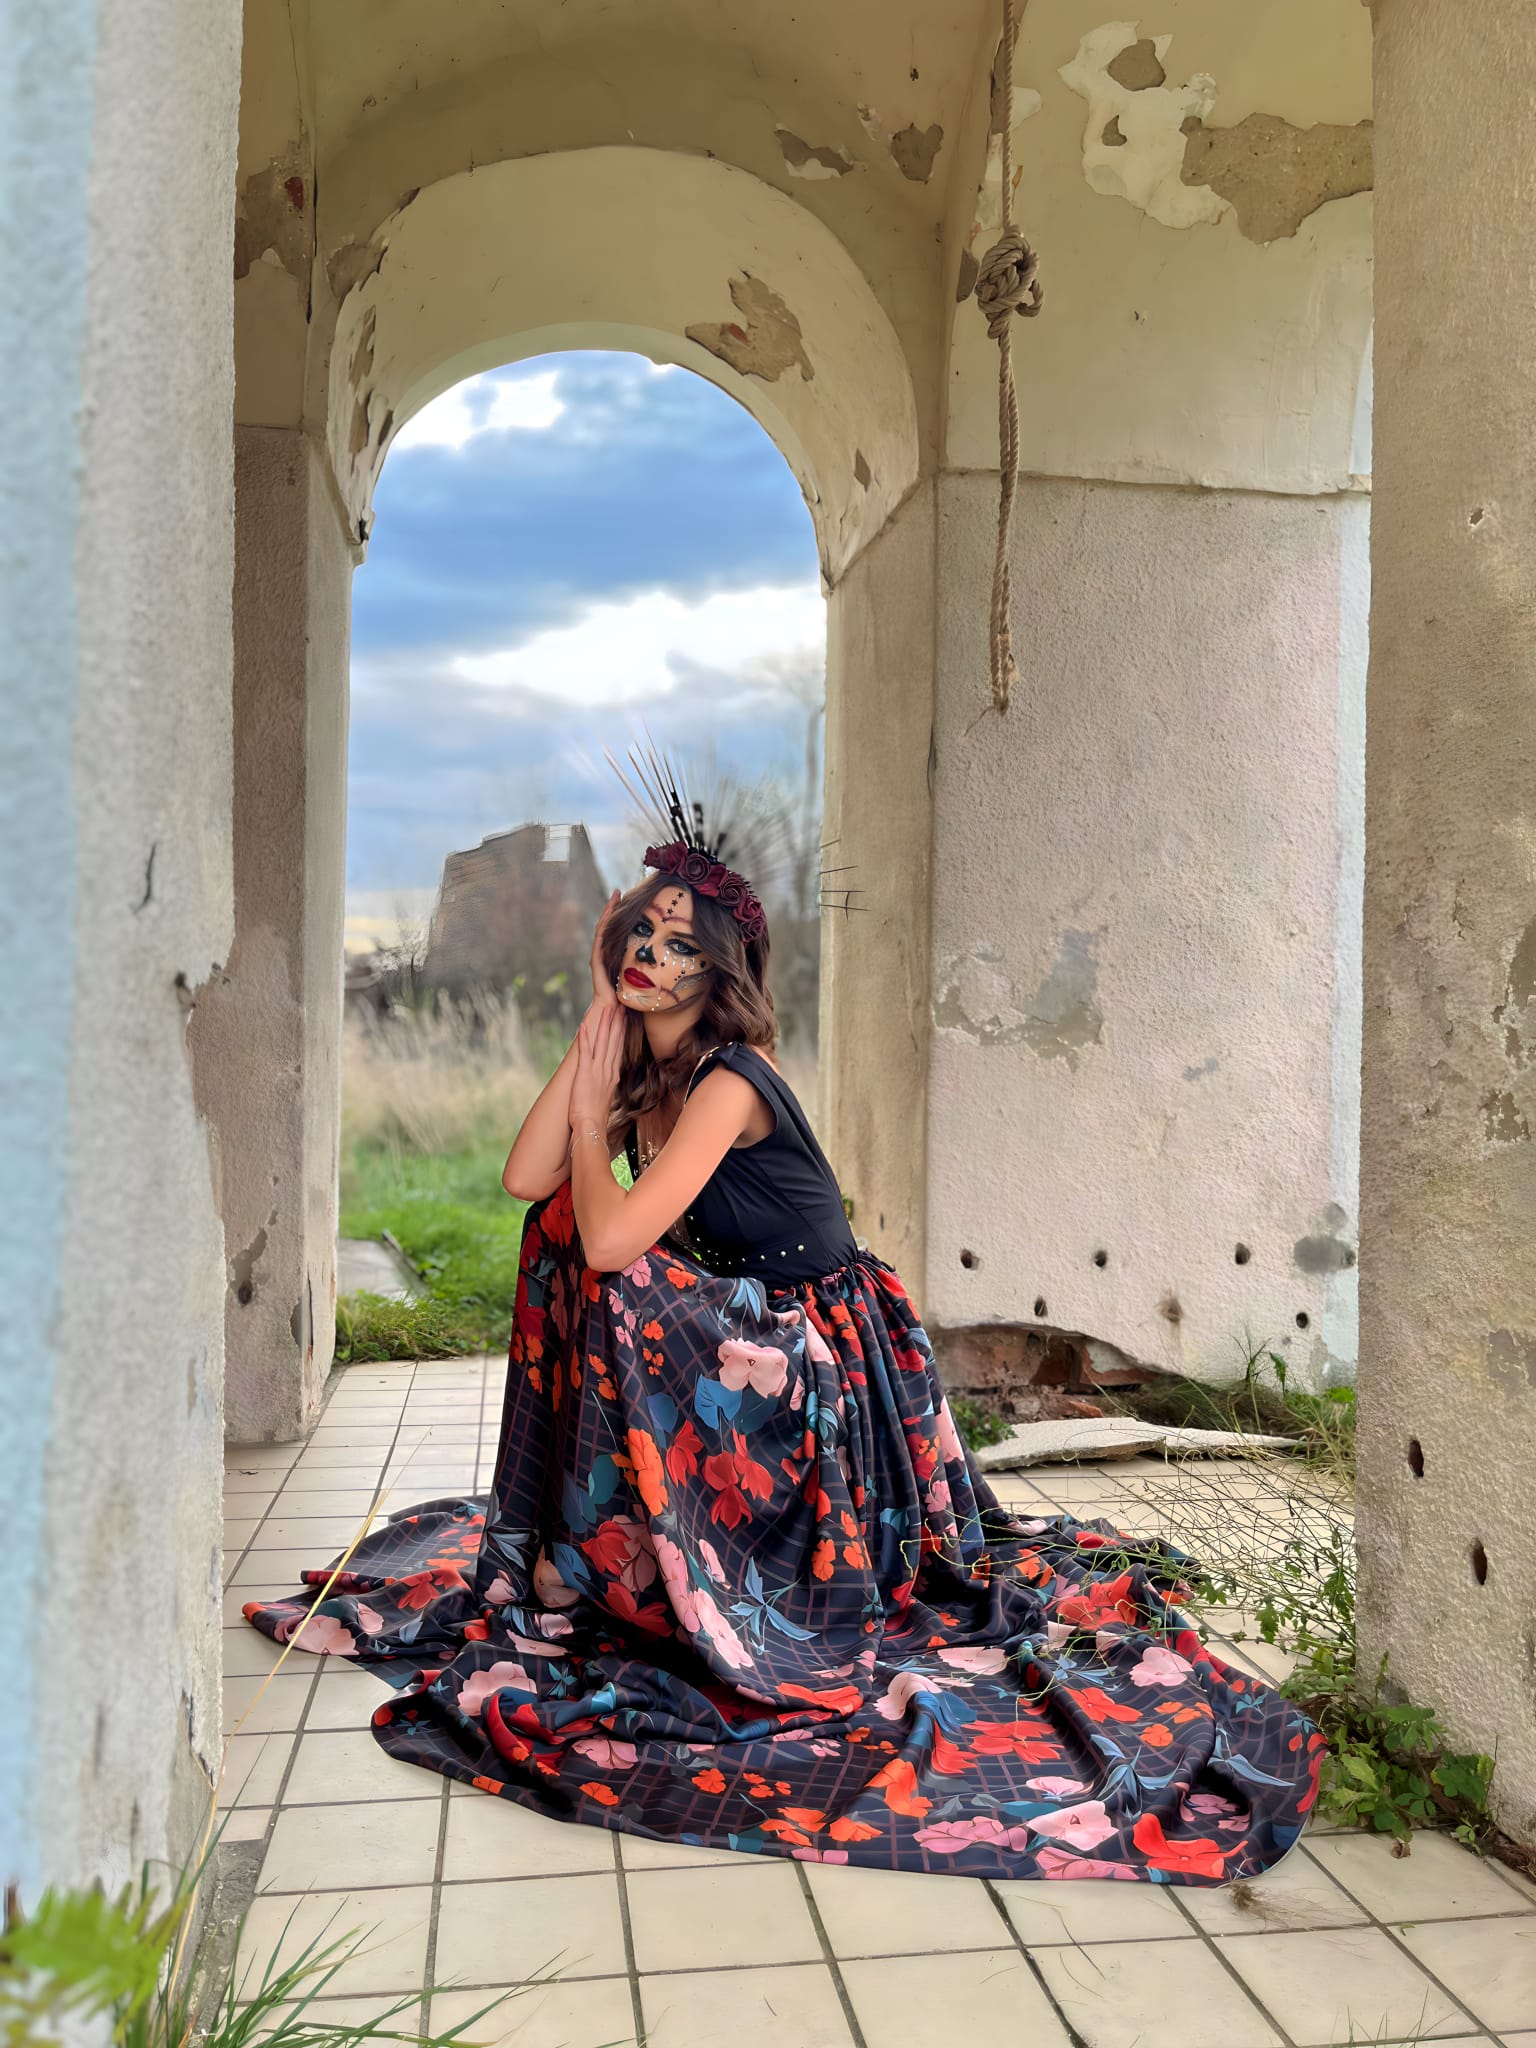 Atelier Fashion Disorder oduševio haljinom inspiriranom meksičkim festivalom Dia de los muertos